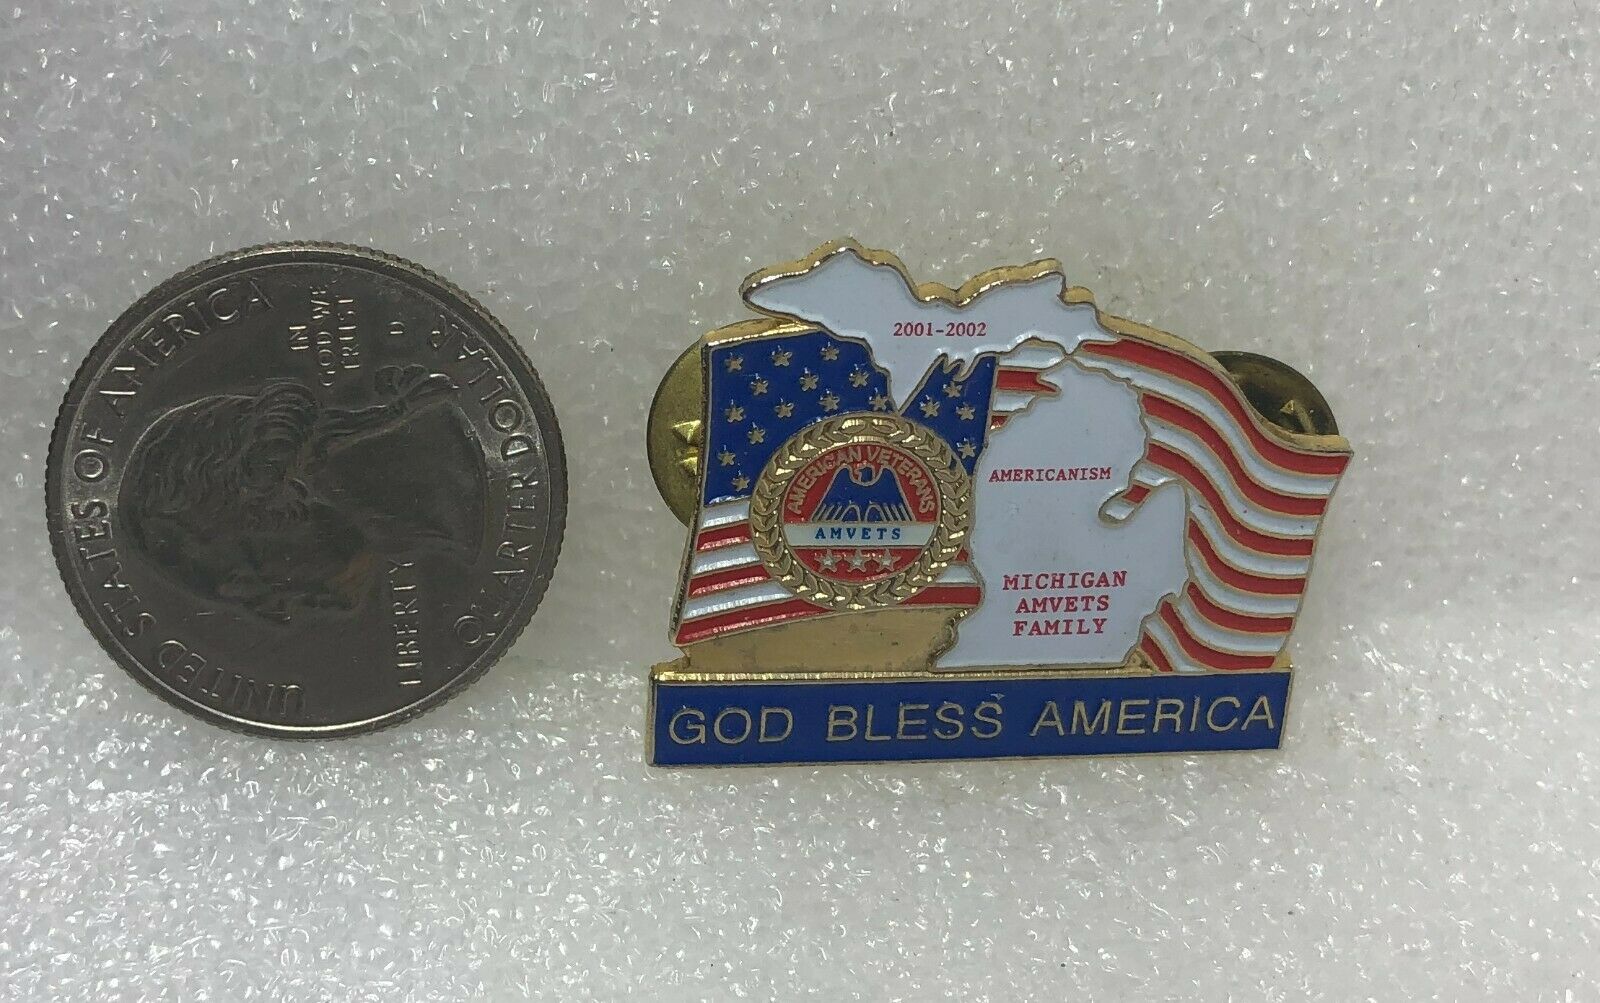 2001-02 Michigan Amvets Family God Bless America Pin